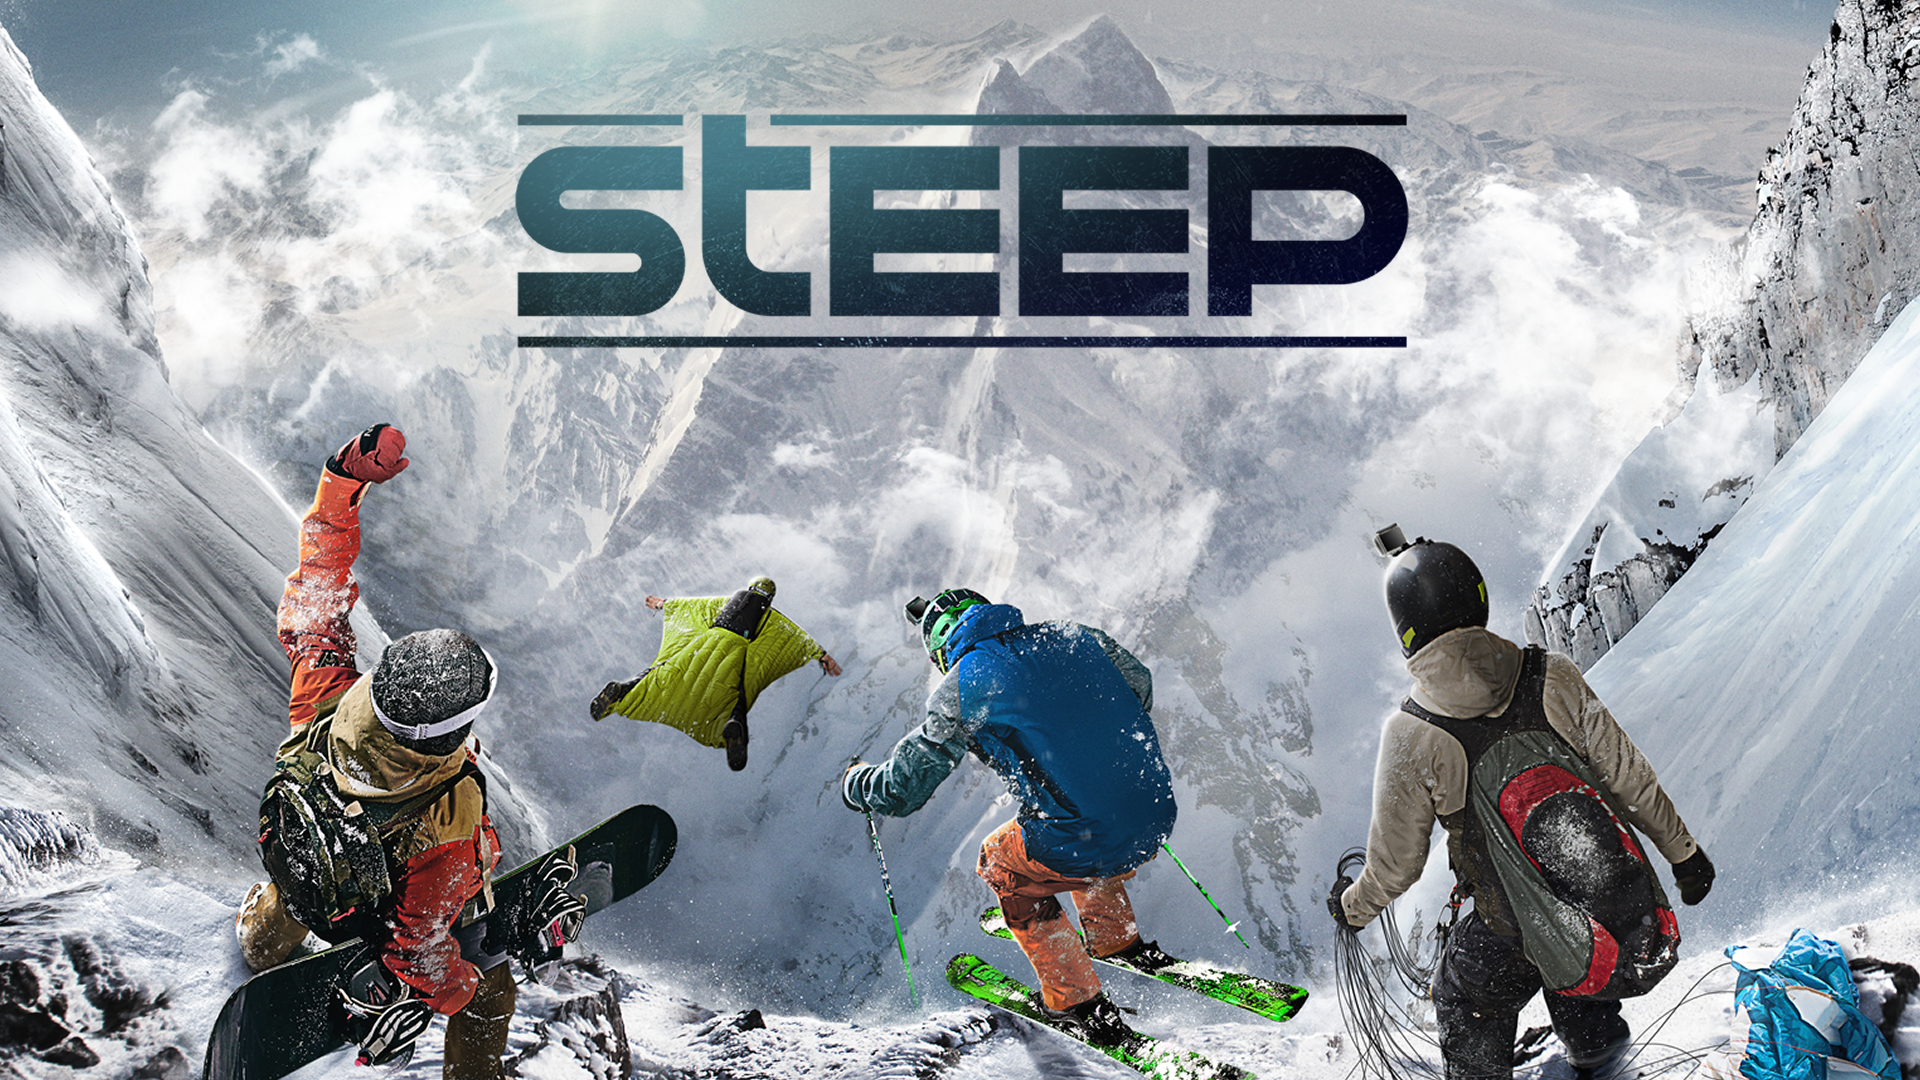 STEEP Gameplay Trailer (E3 2016) 